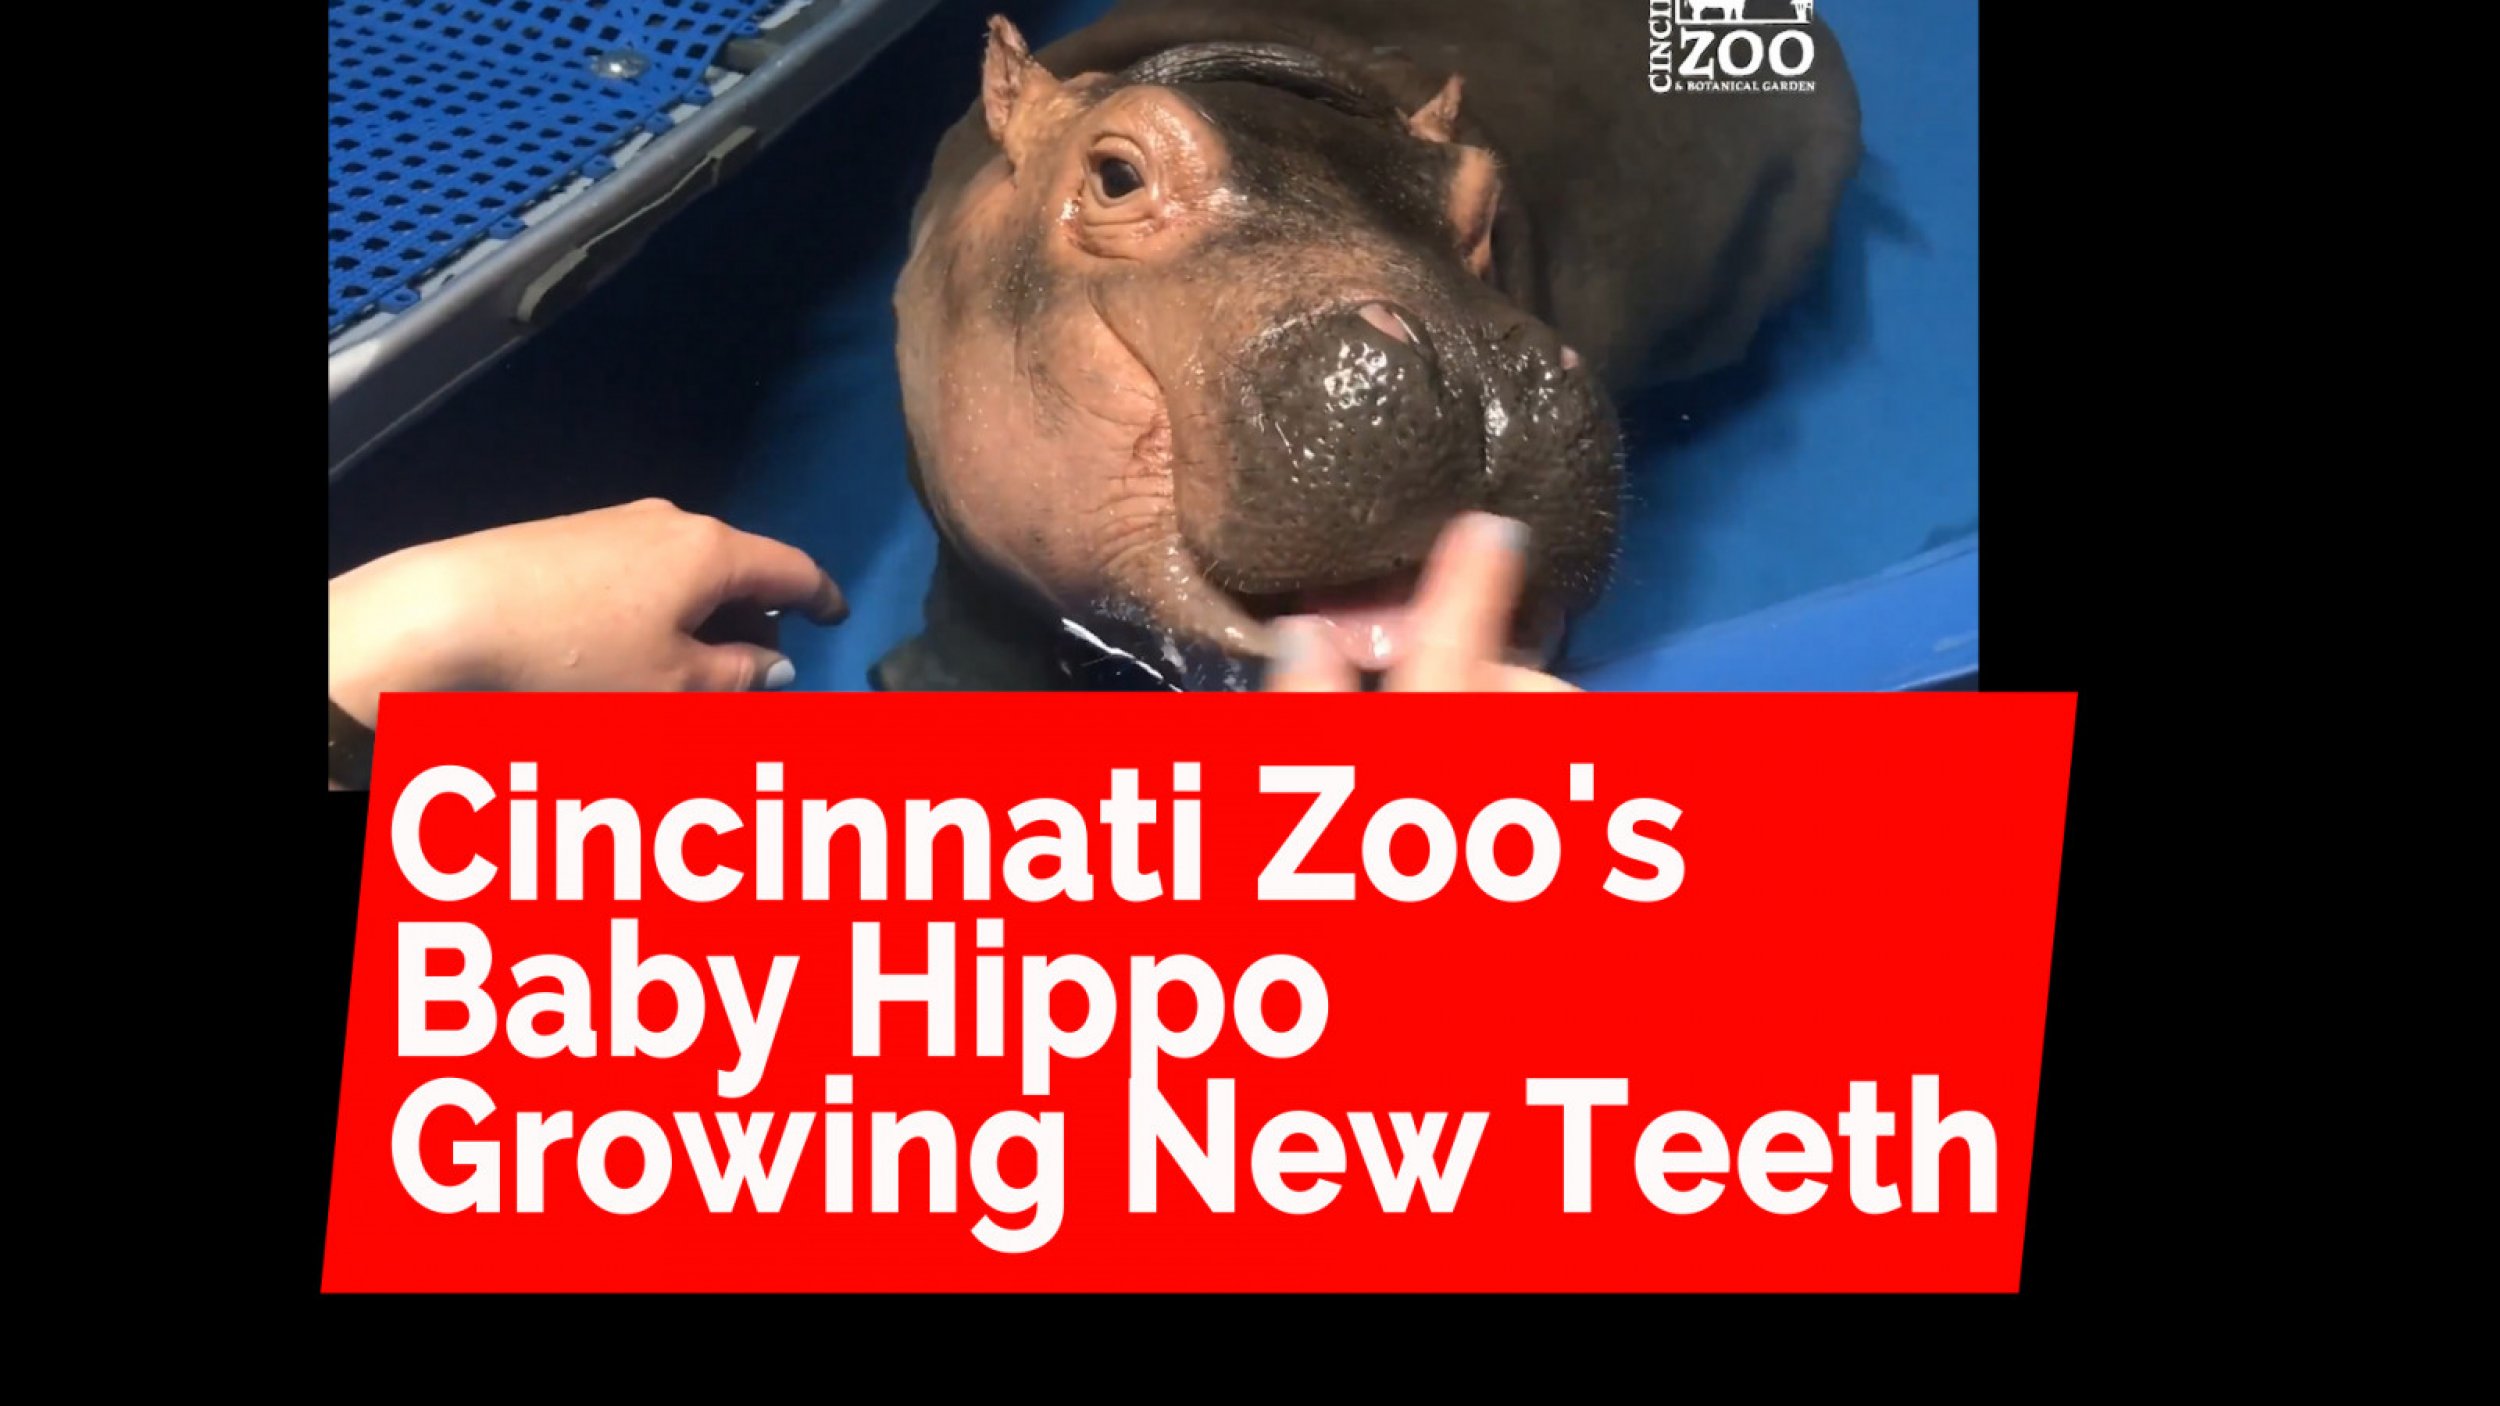  Cincinnati Zoos Baby Hippo Growing New Teeth